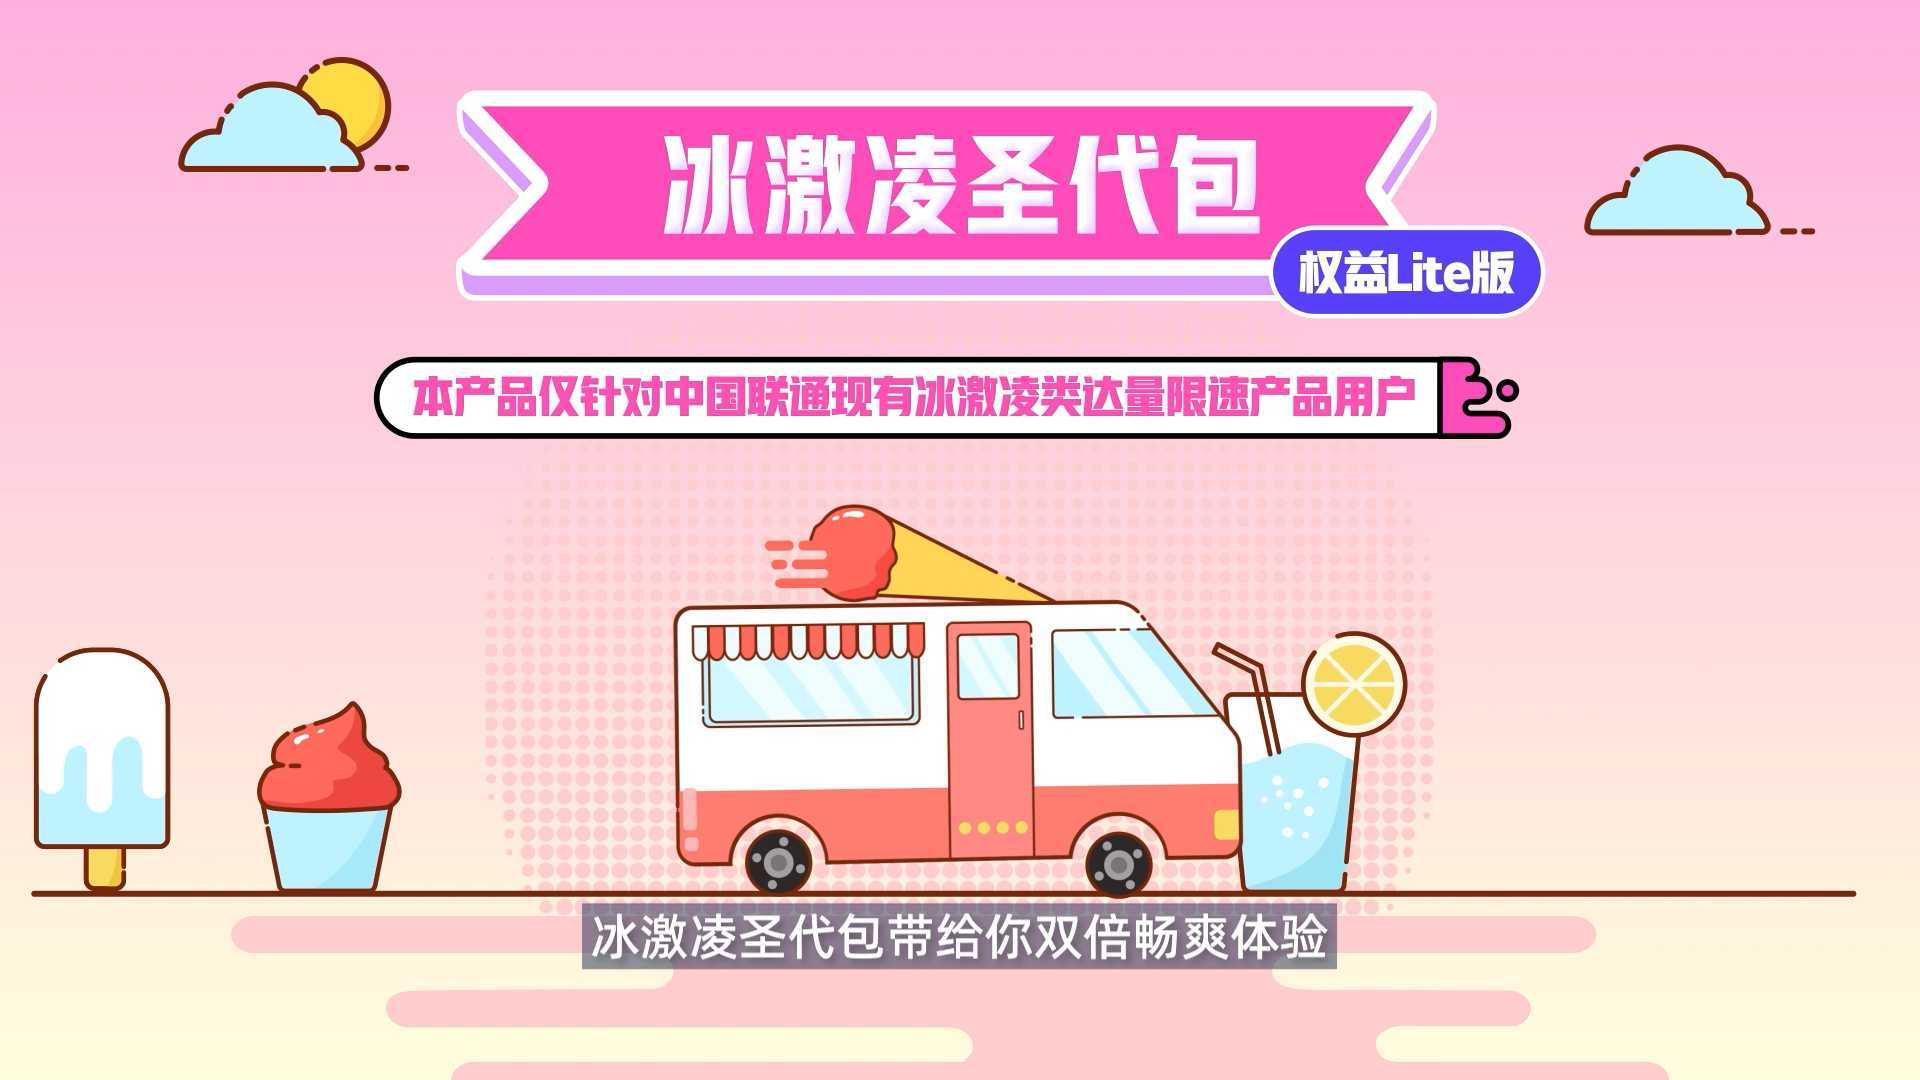 【MG动画】中国联通冰激凌圣代包宣传动画